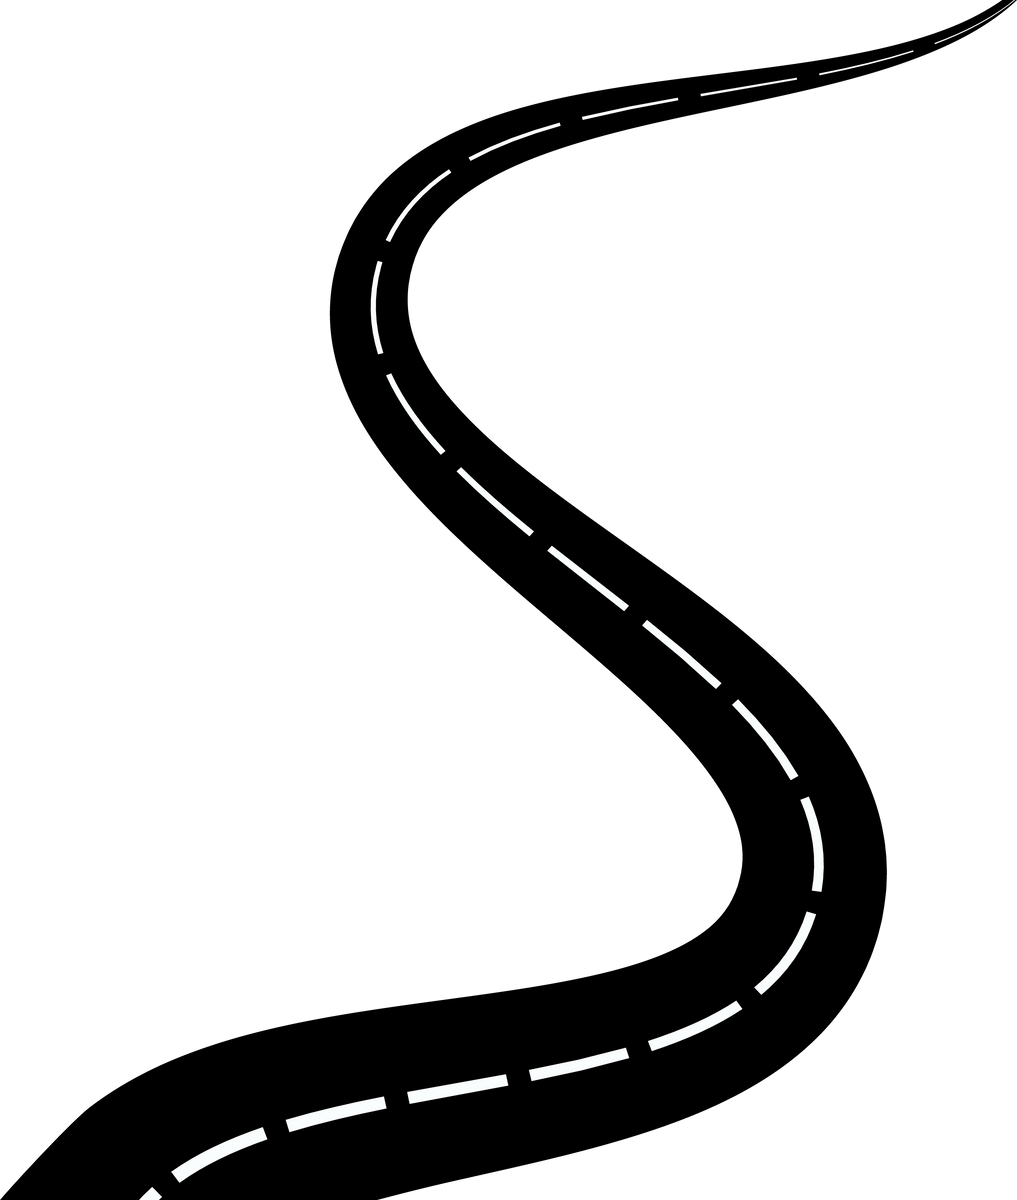 Curved Road Illustration